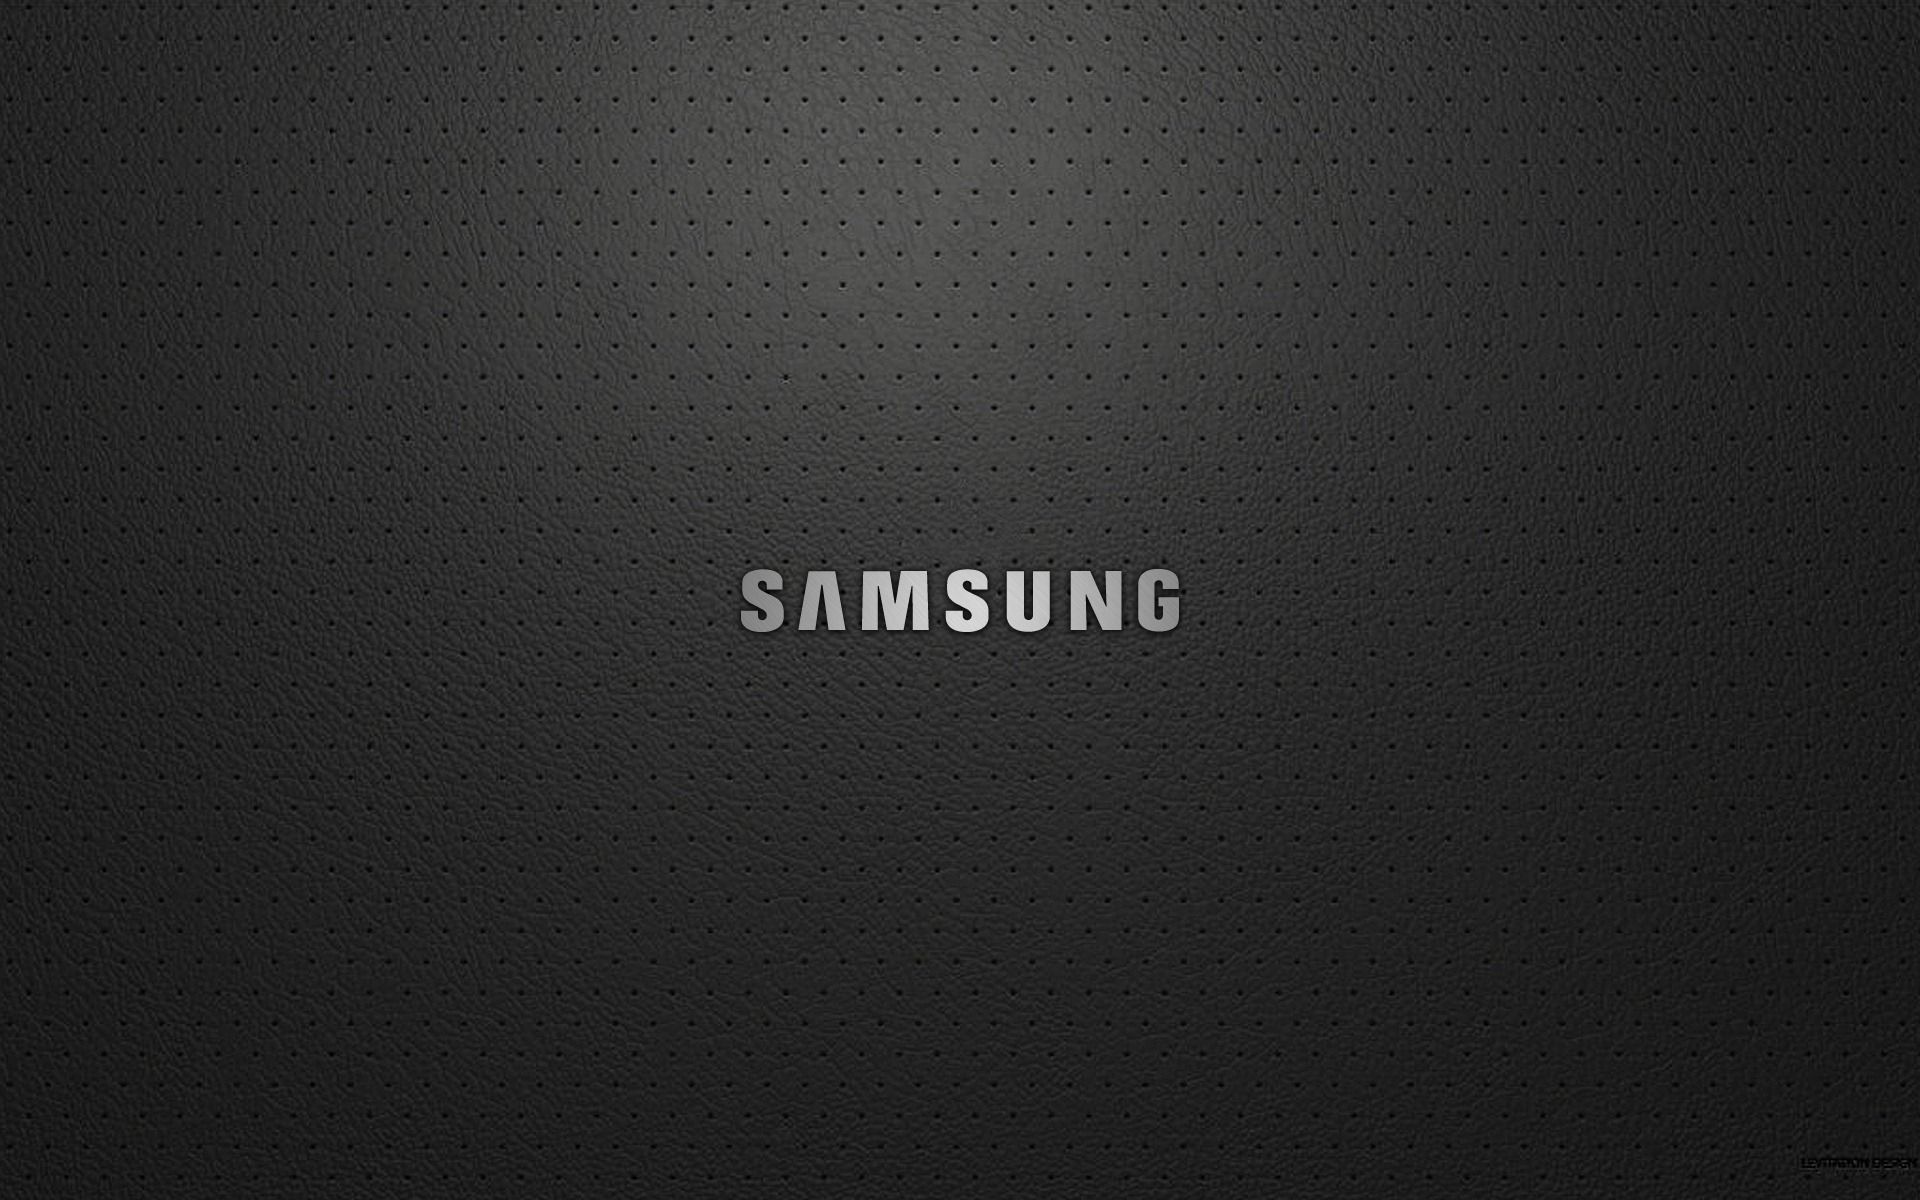 Samsung wallpapers